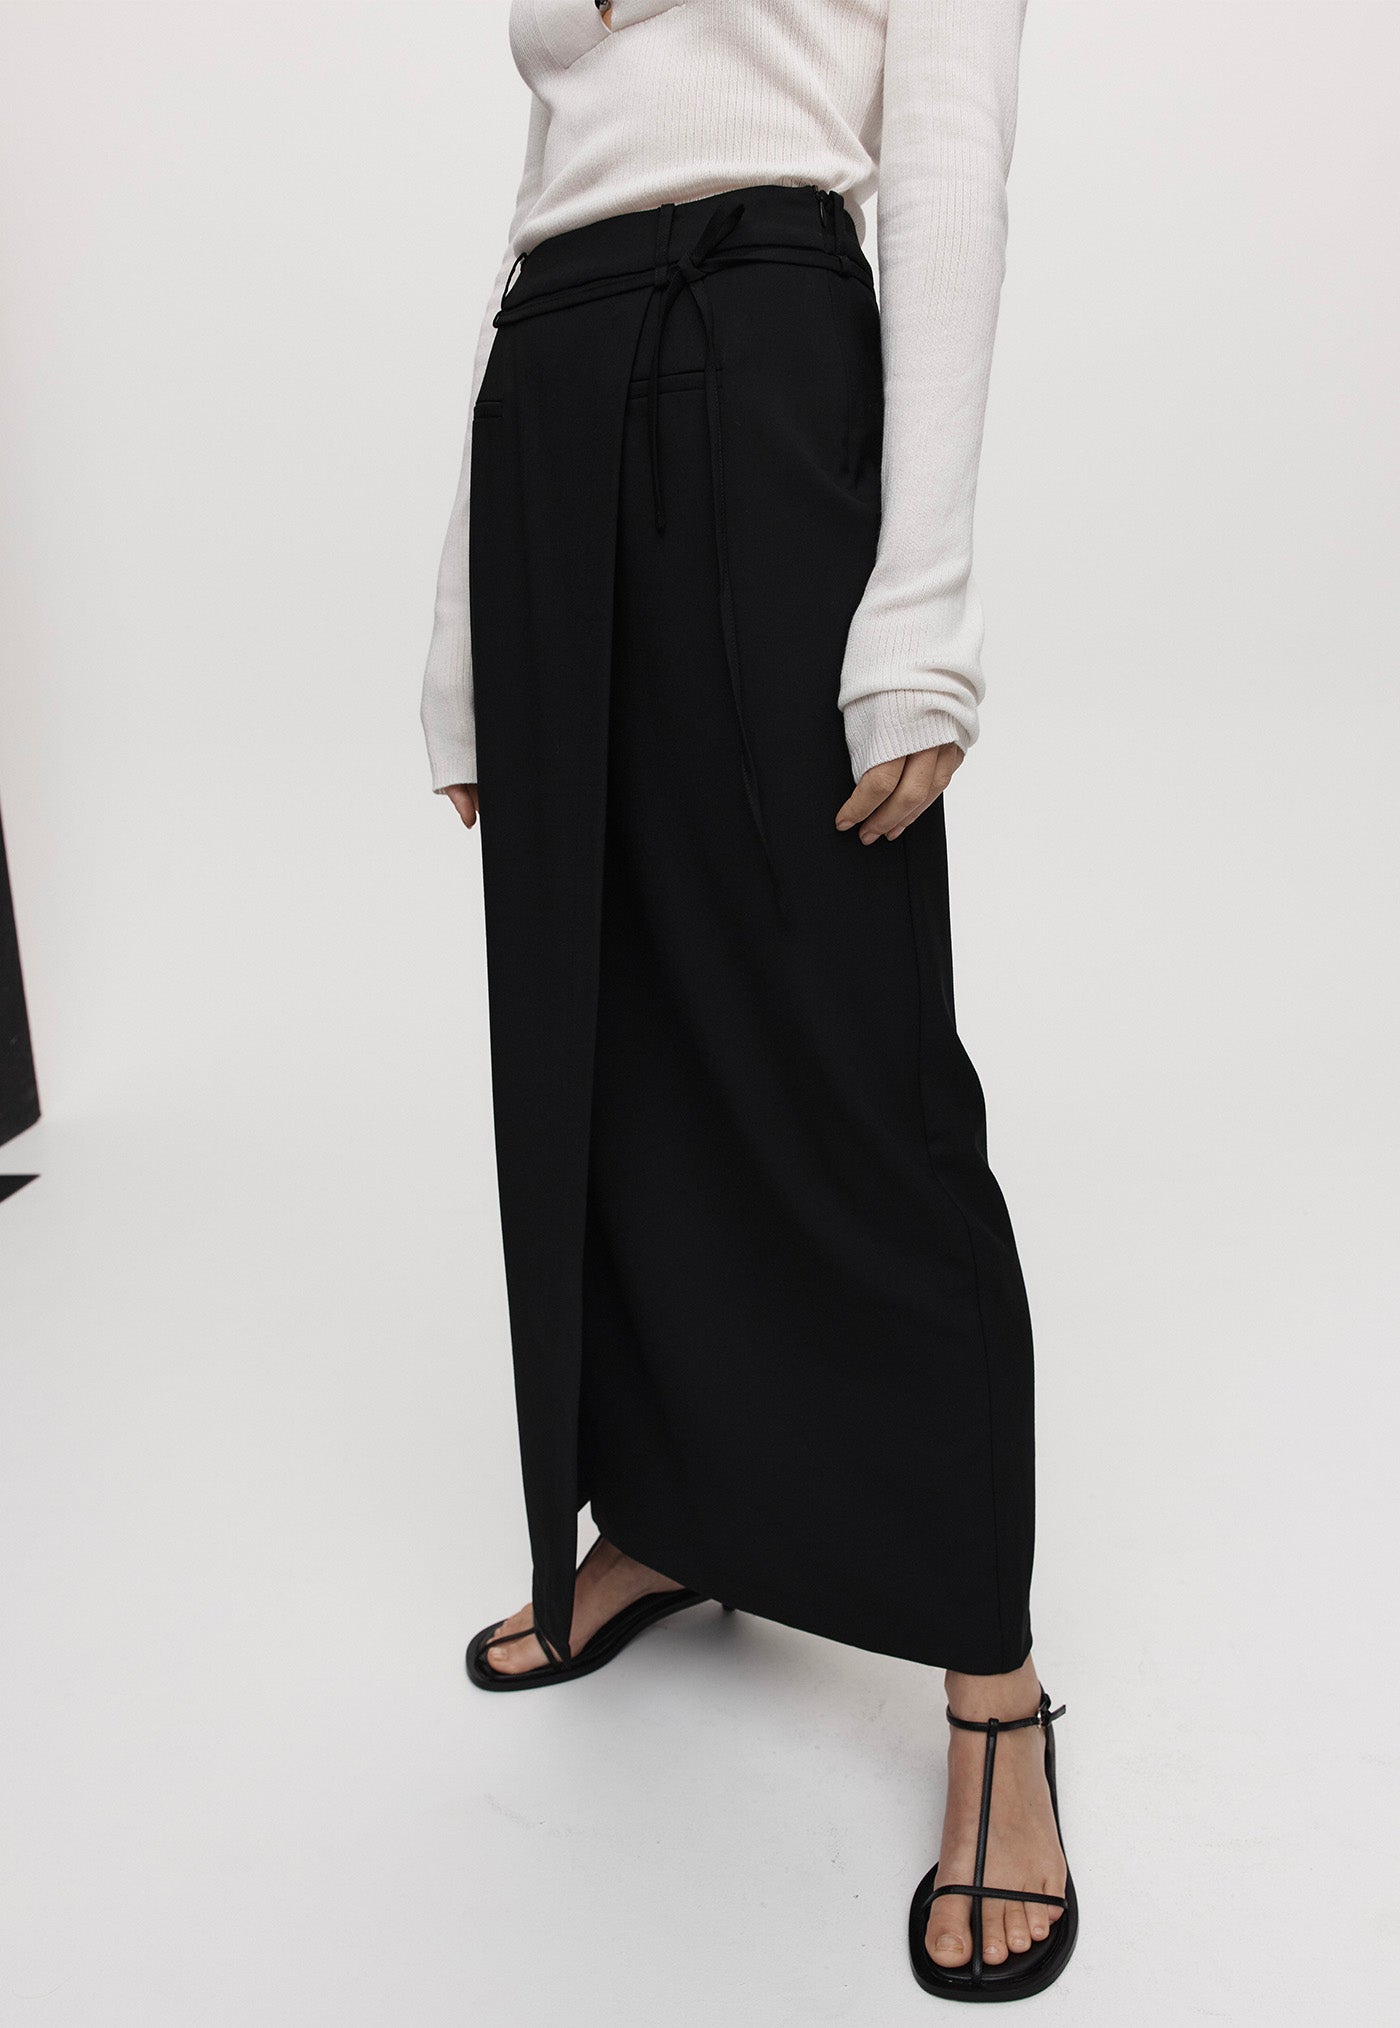 Carmella Skirt - Black sold by Angel Divine